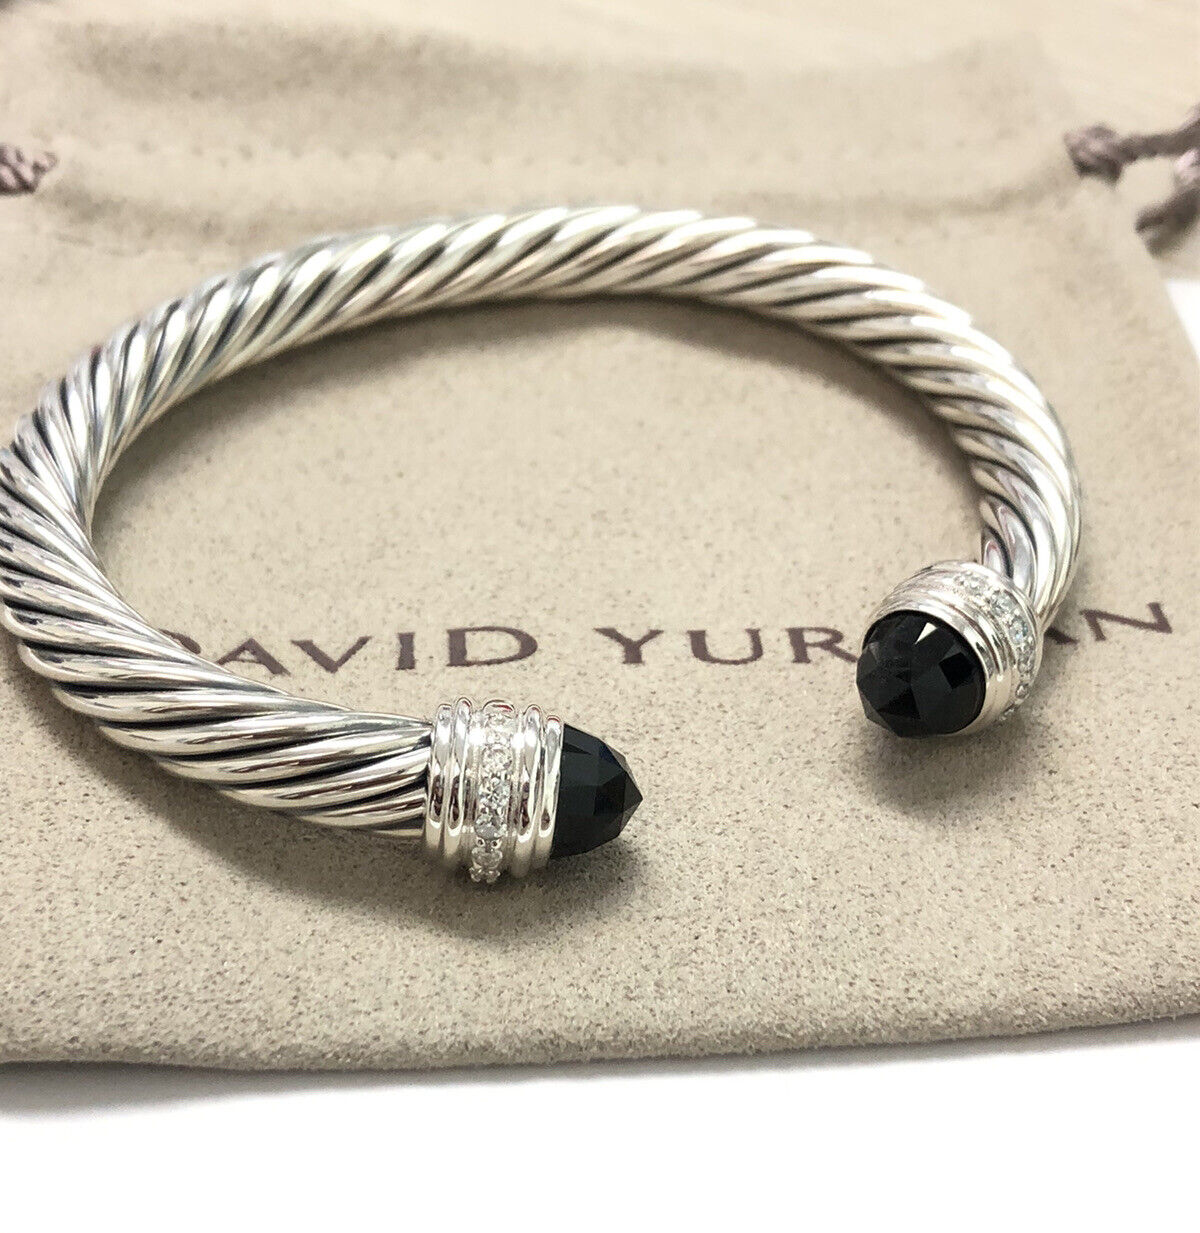 David Yurman Silver 7mm Cable Classic Black Onyx & Diamonds Bracelet size M